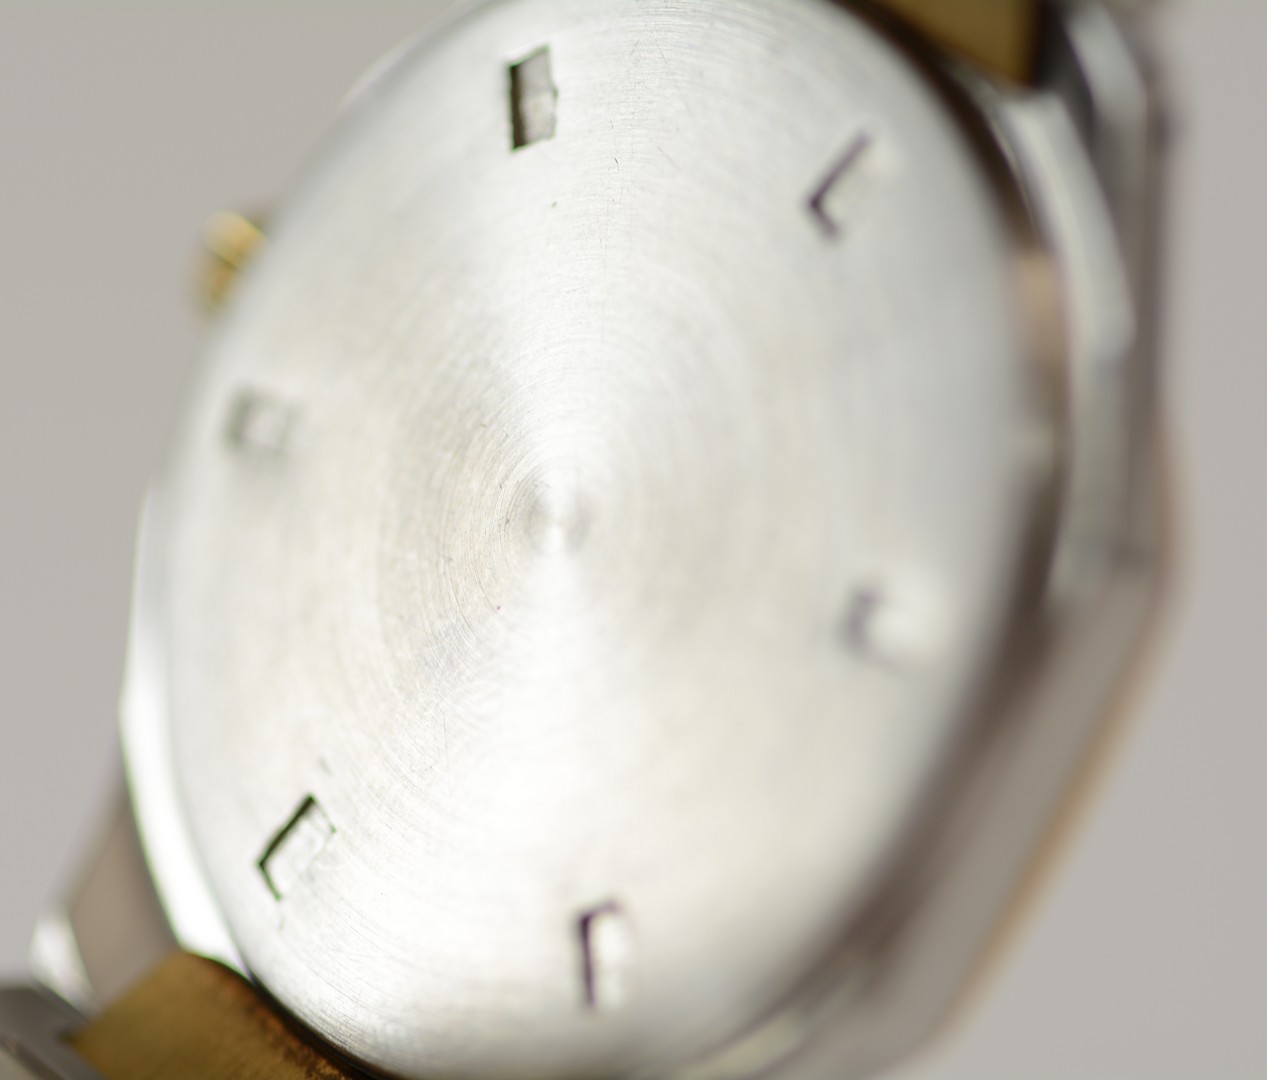 IWC / Yatch Club II - Gentlemen's Gold/Steel Wristwatch - Image 4 of 6